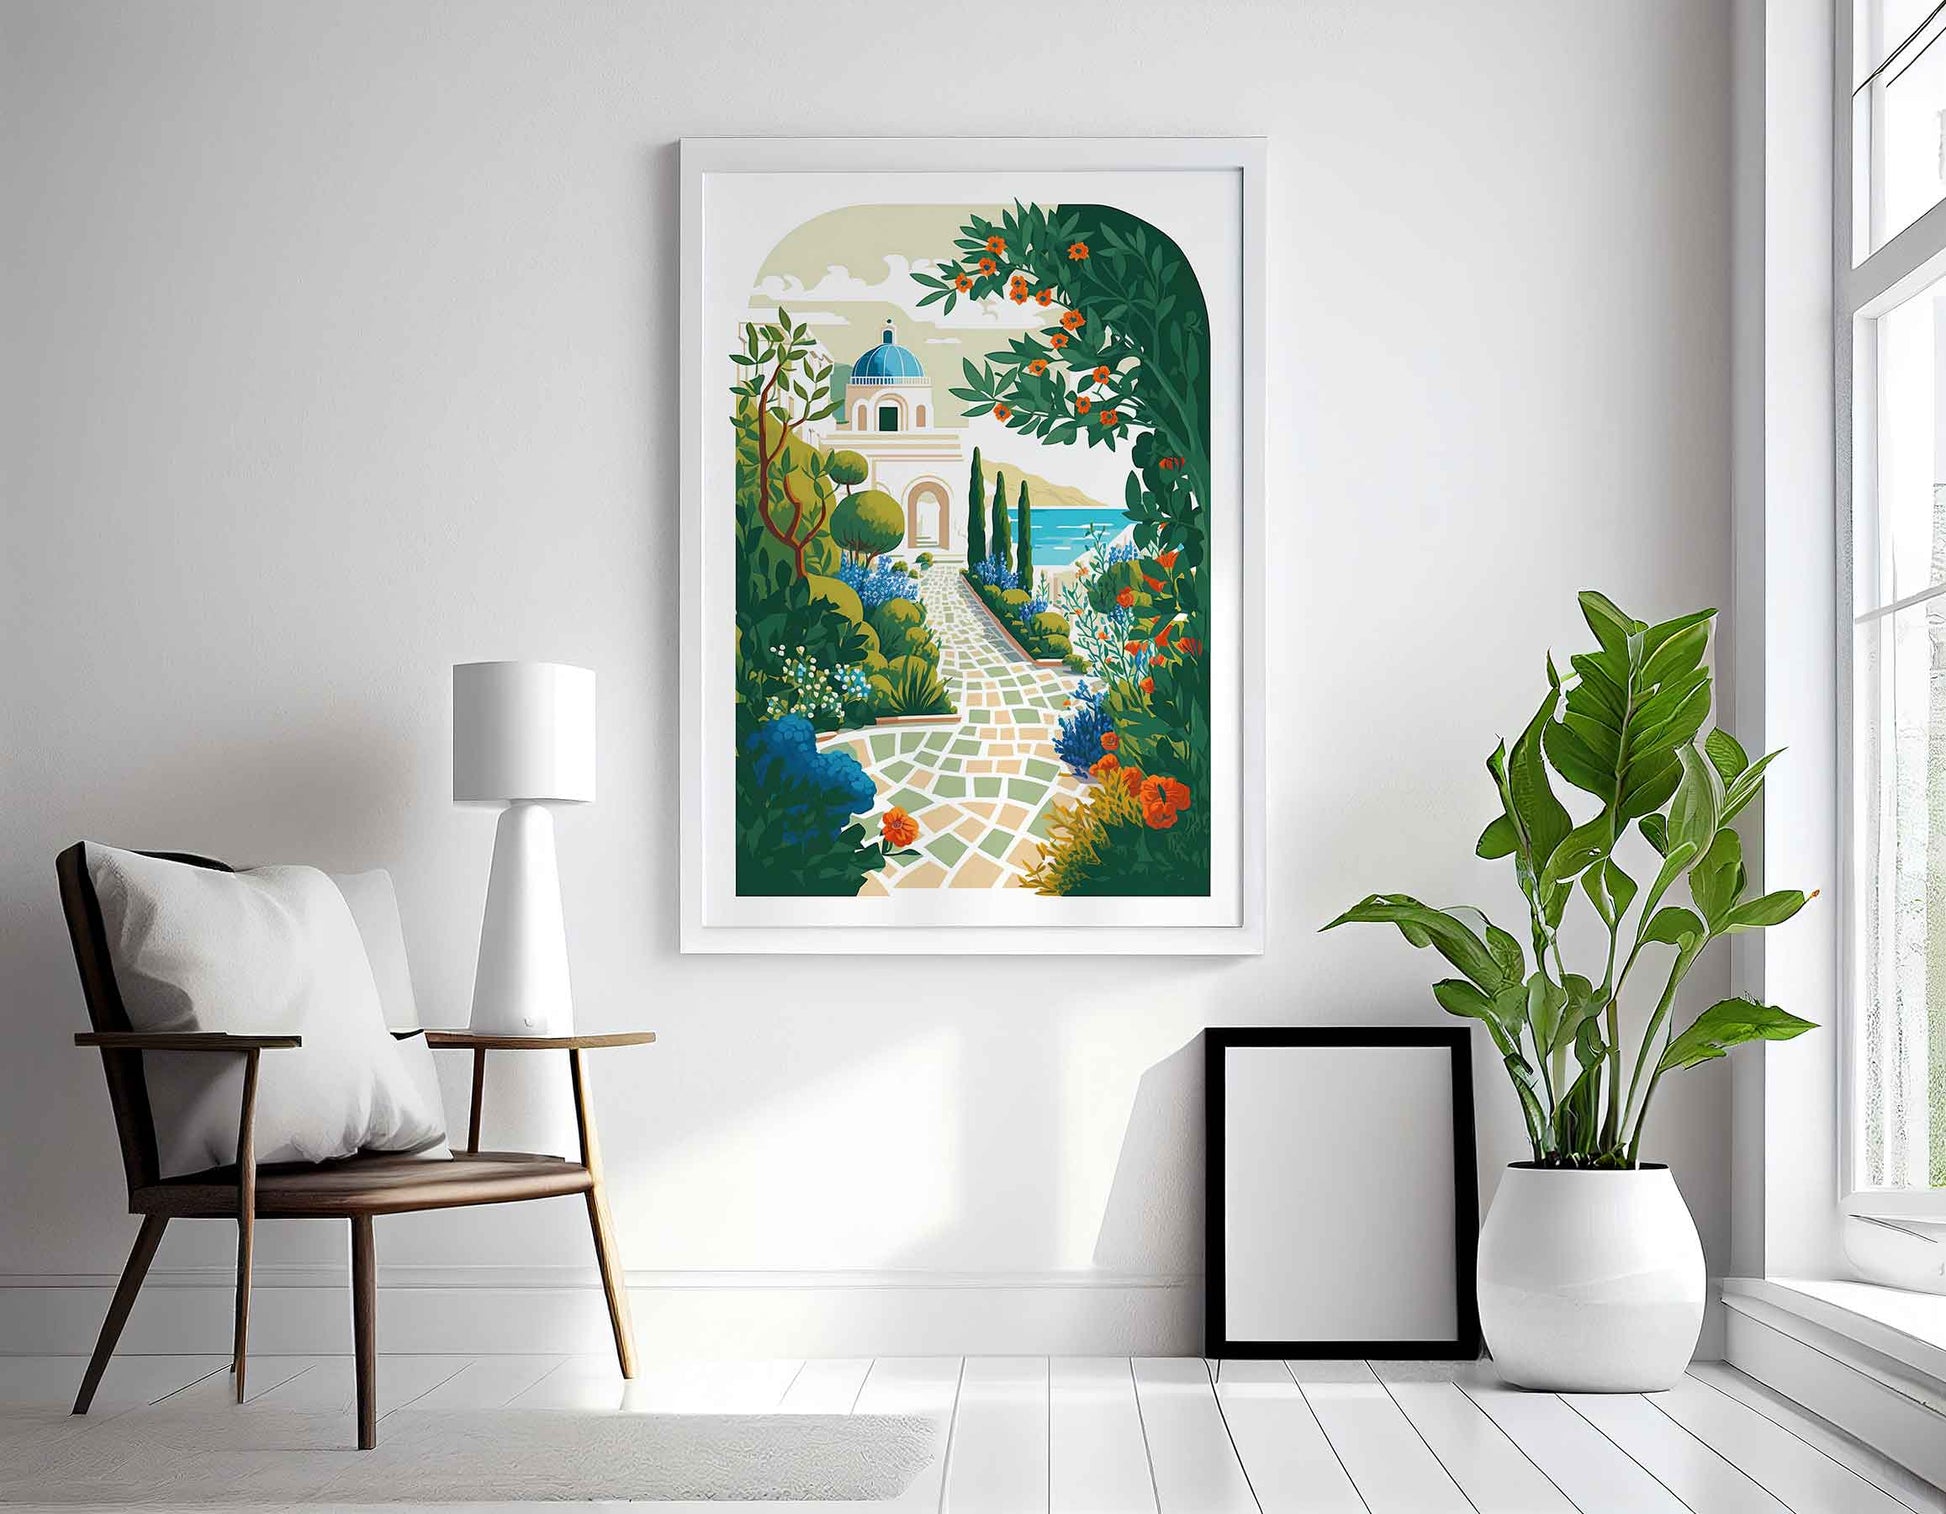 Framed Image of Greek Summer Garden in Bloom Illustration Wall Art Poster Print